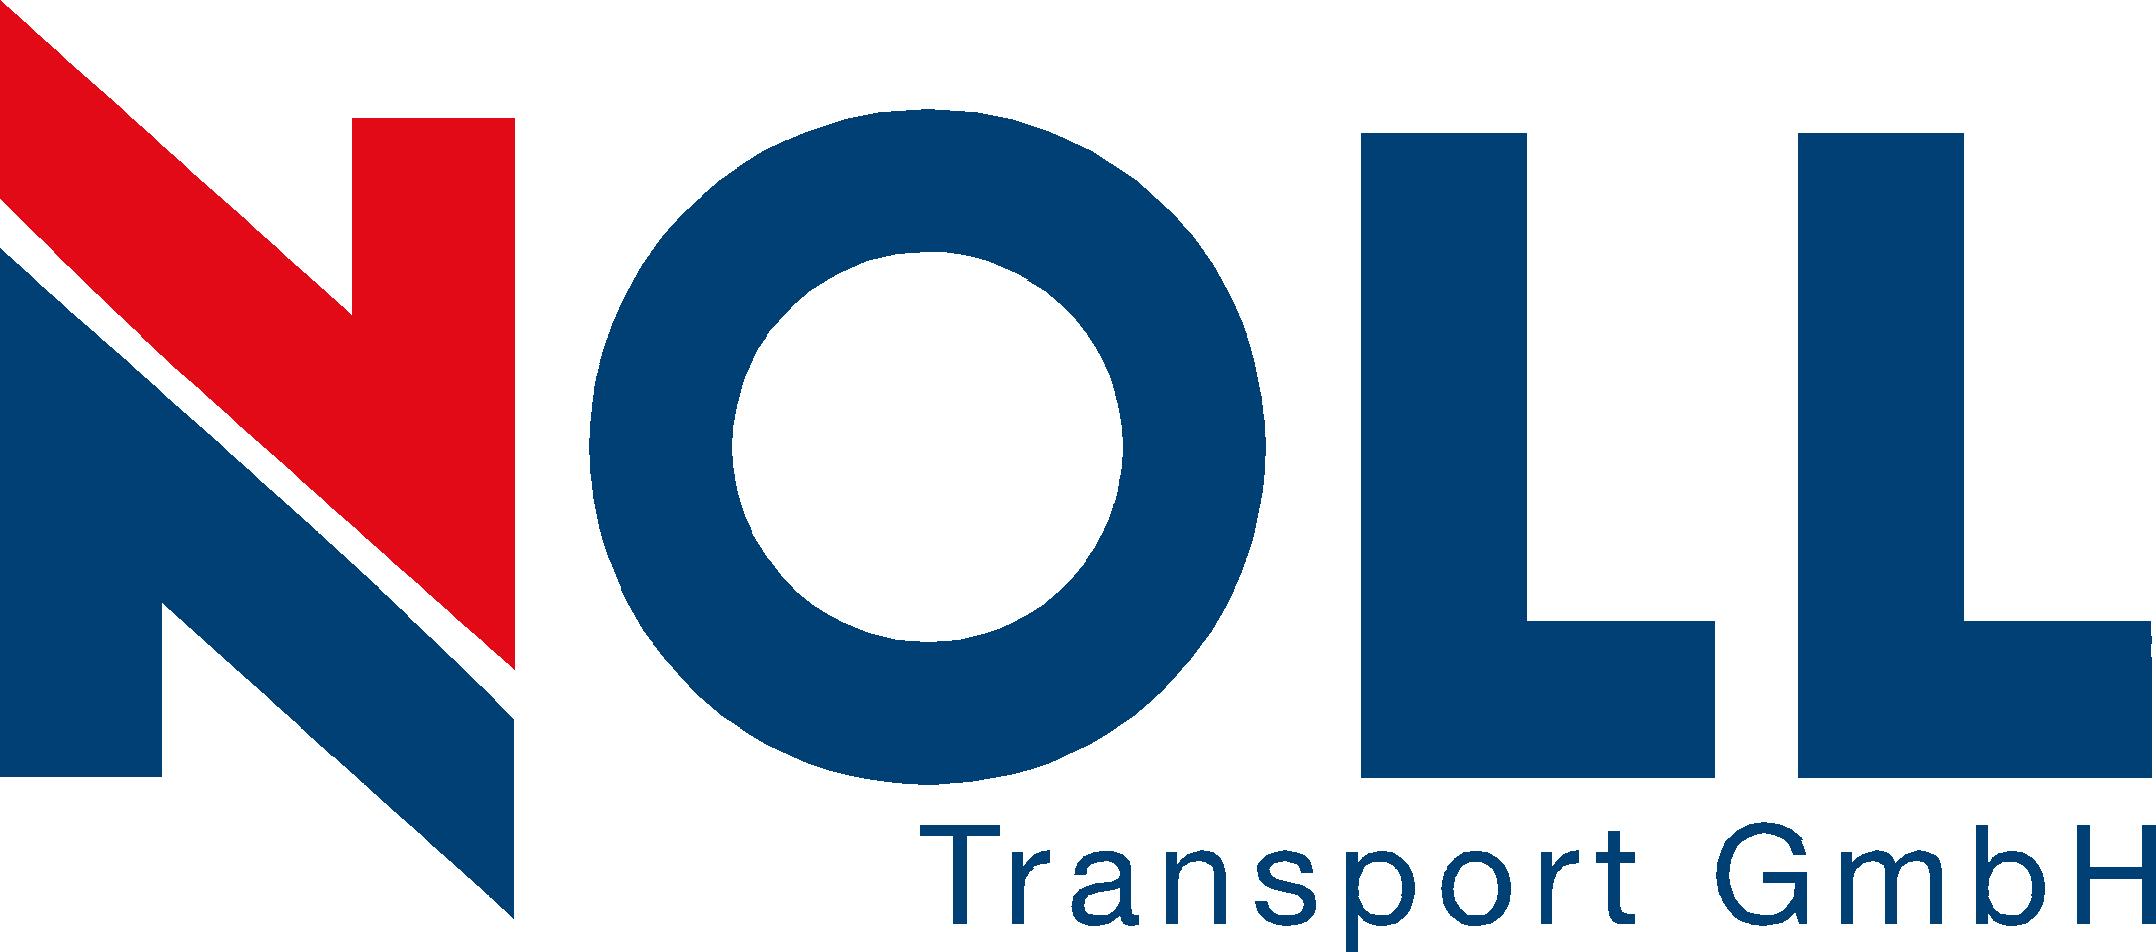 Noll Transport GmbH